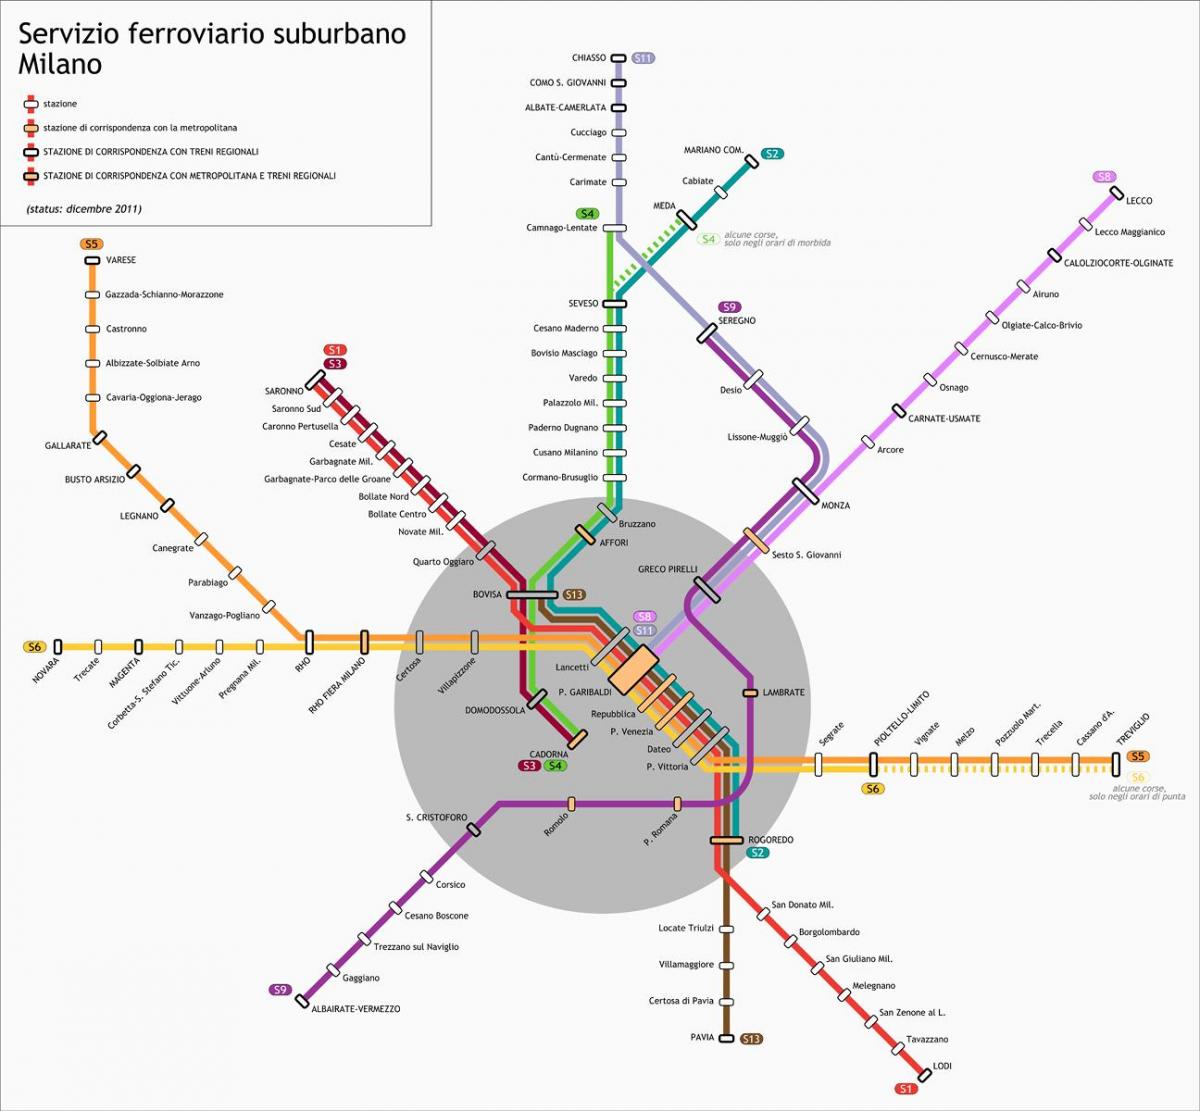 kort over milano transit 